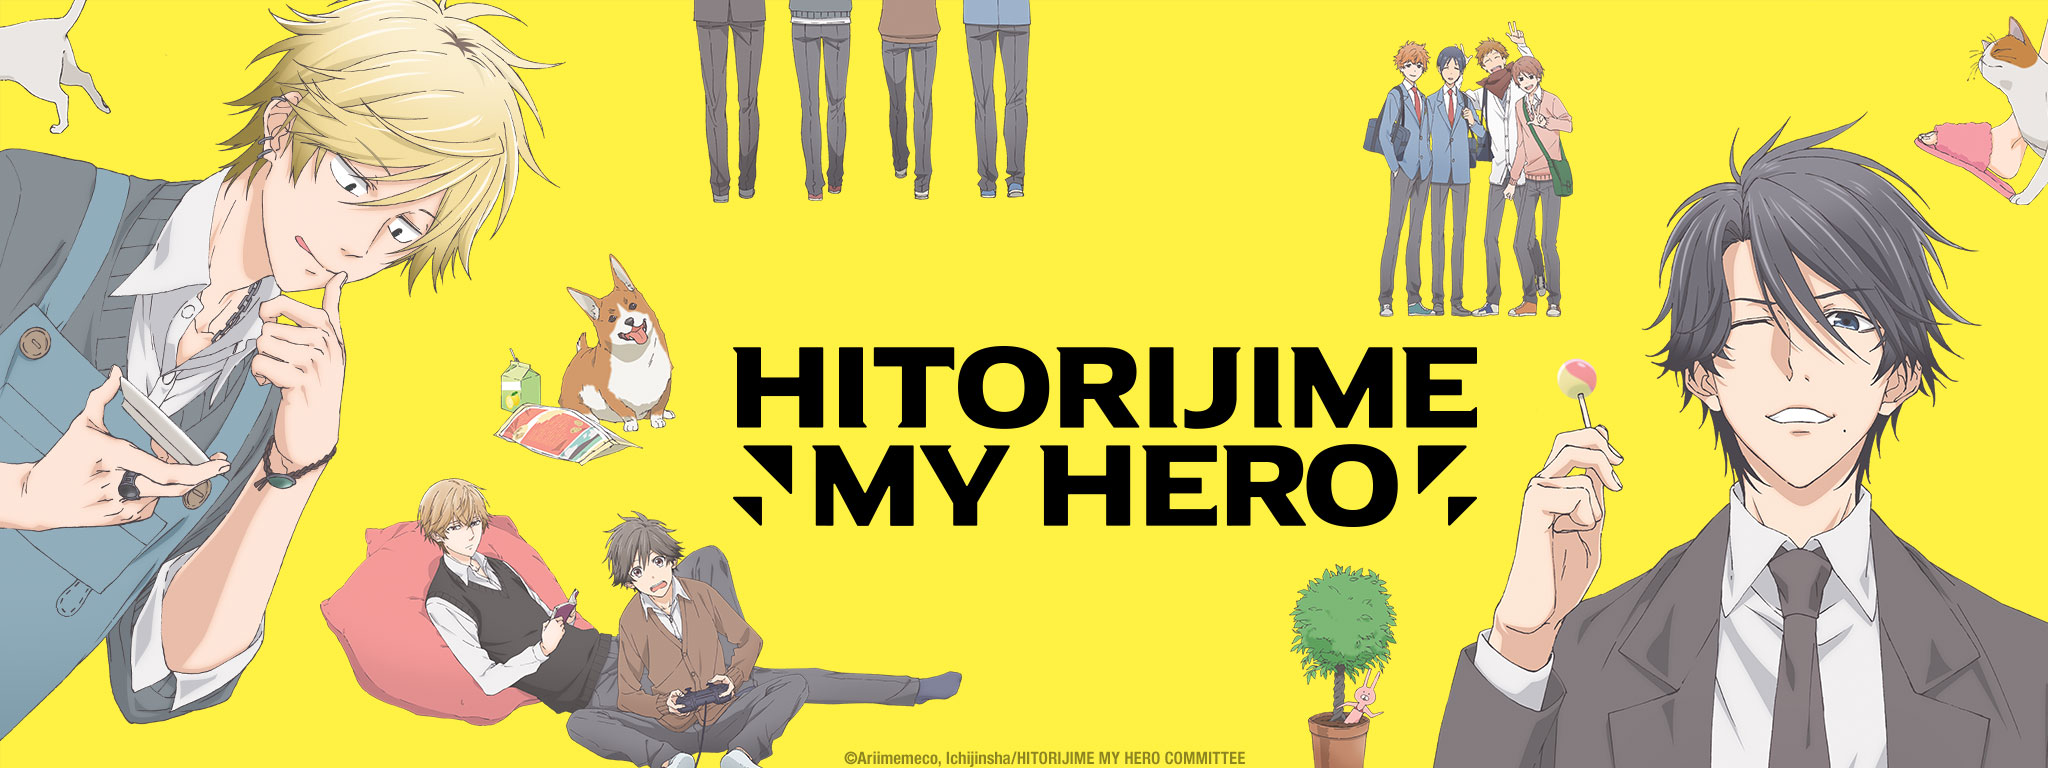 Title Art for Hitorijime My Hero